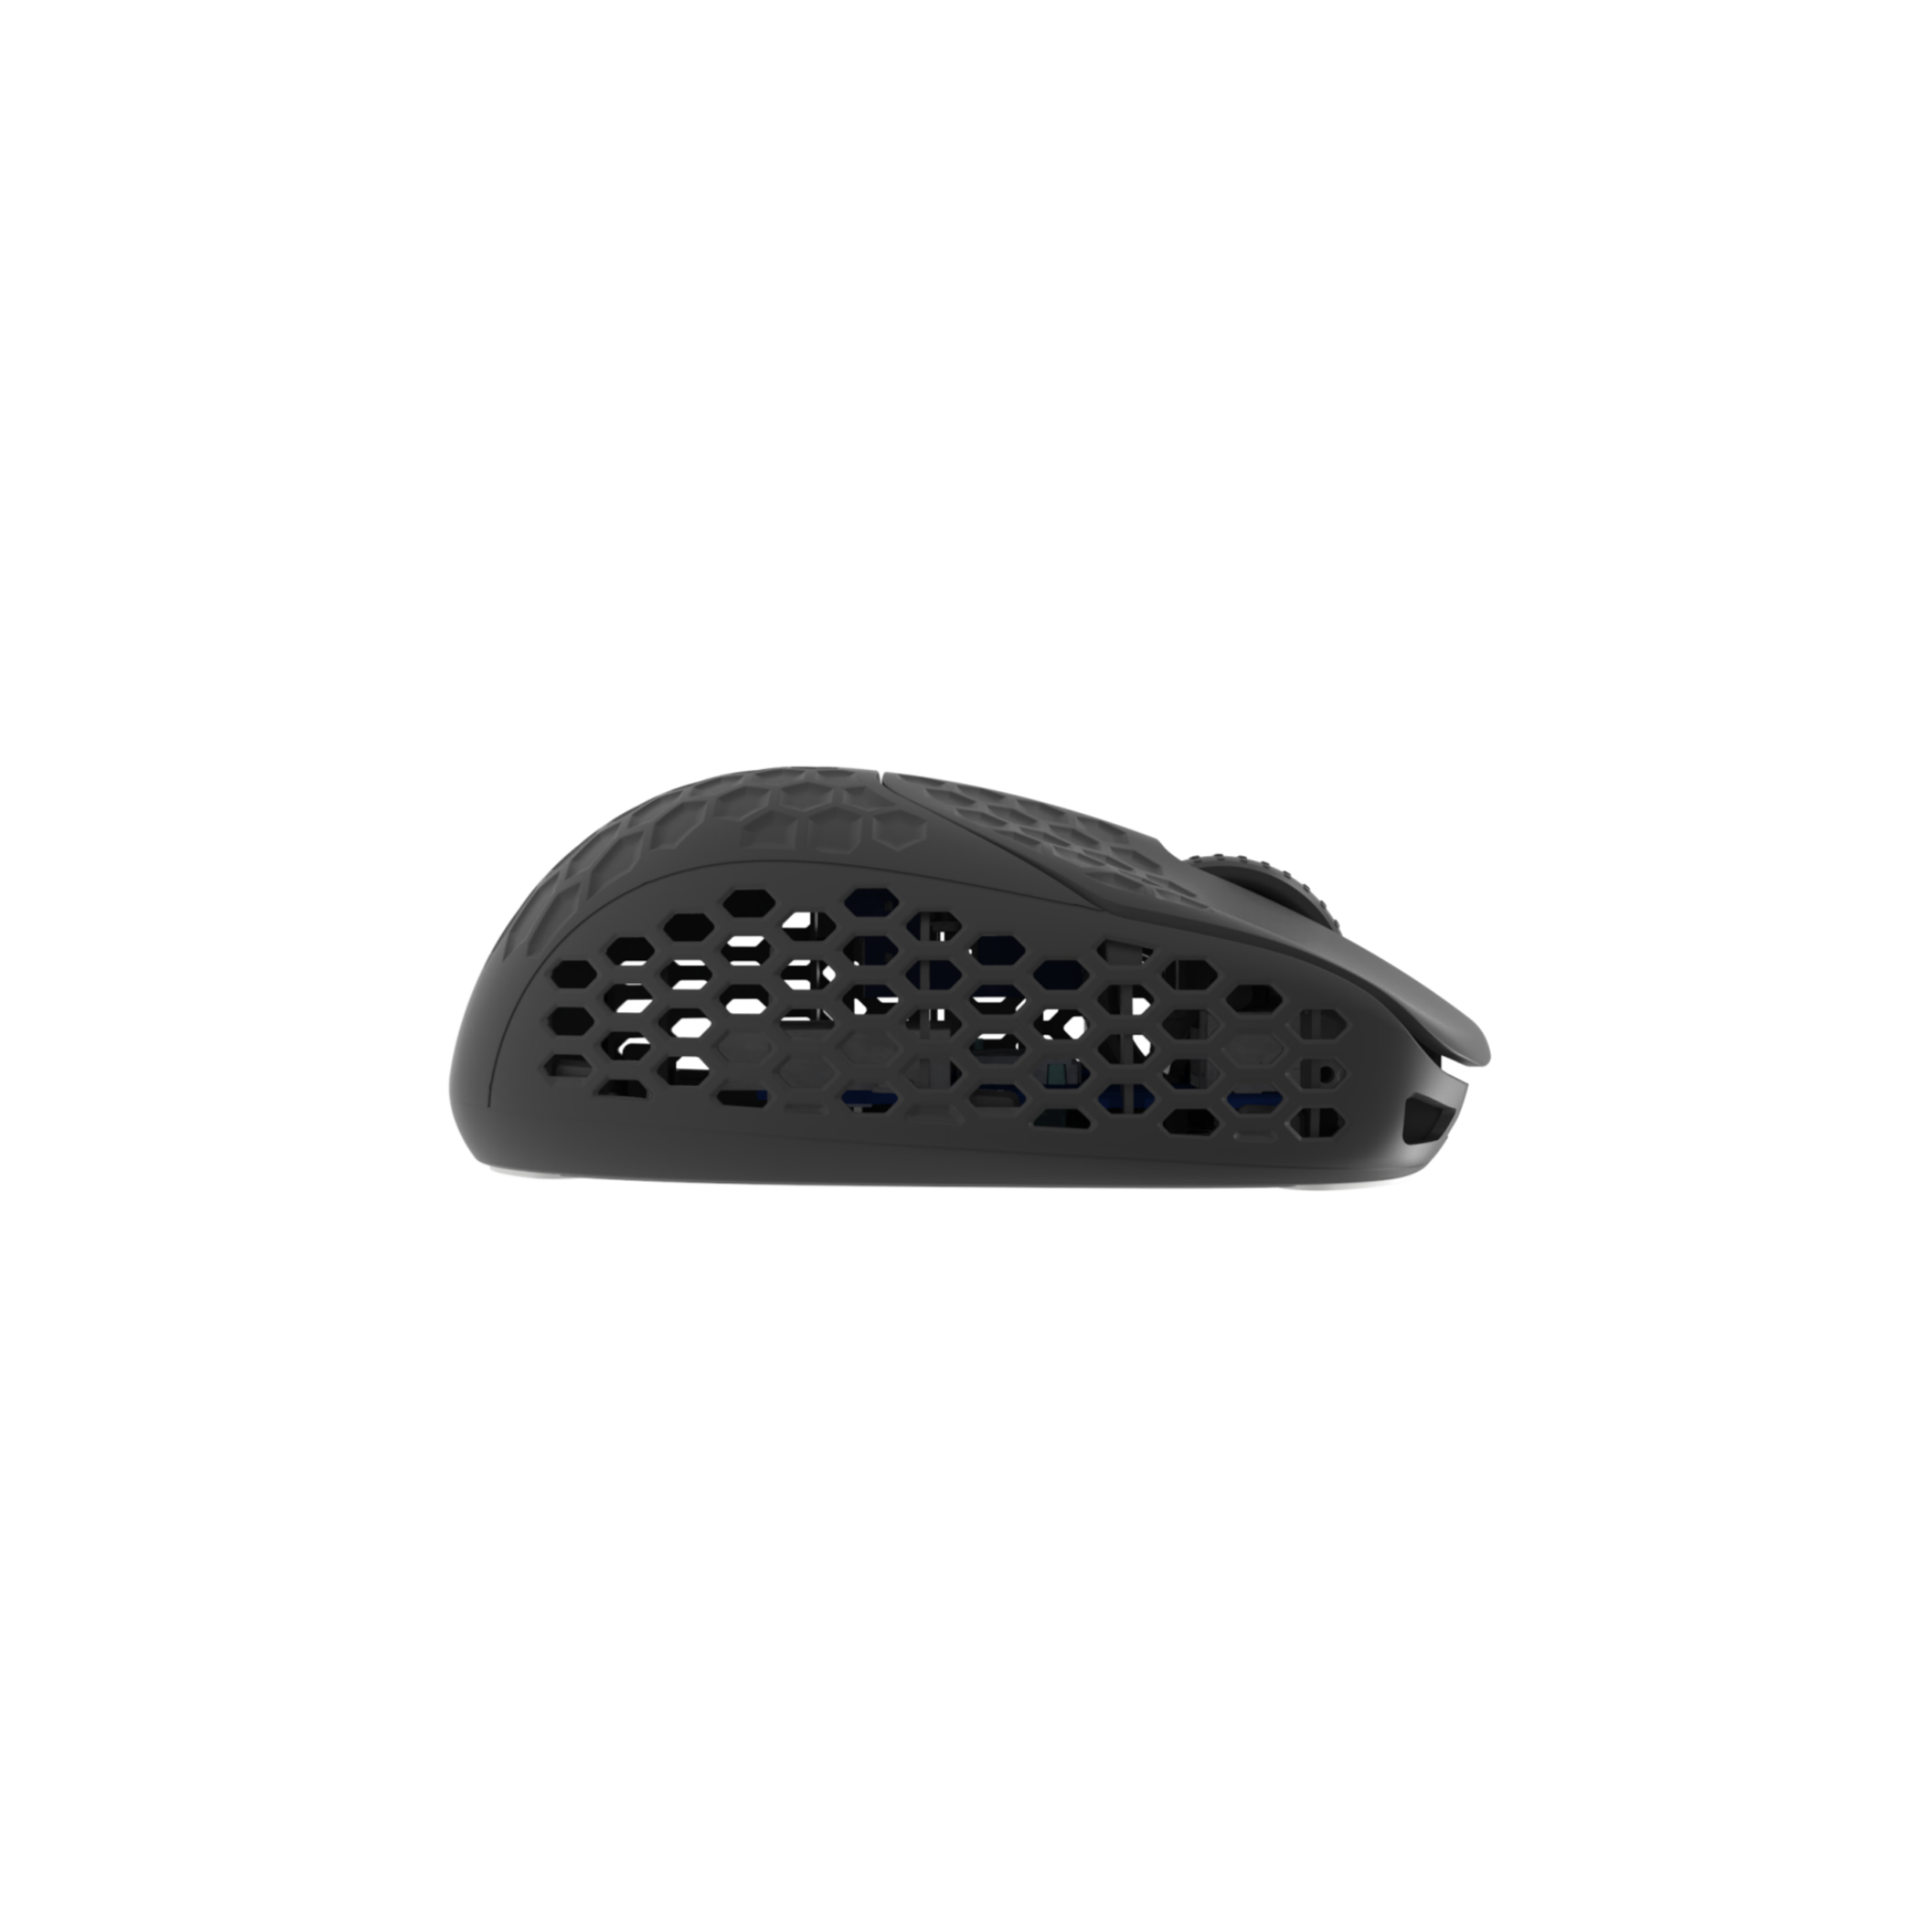 G-Wolves HTR 8K Wireless Mouse ( Pre-Order )